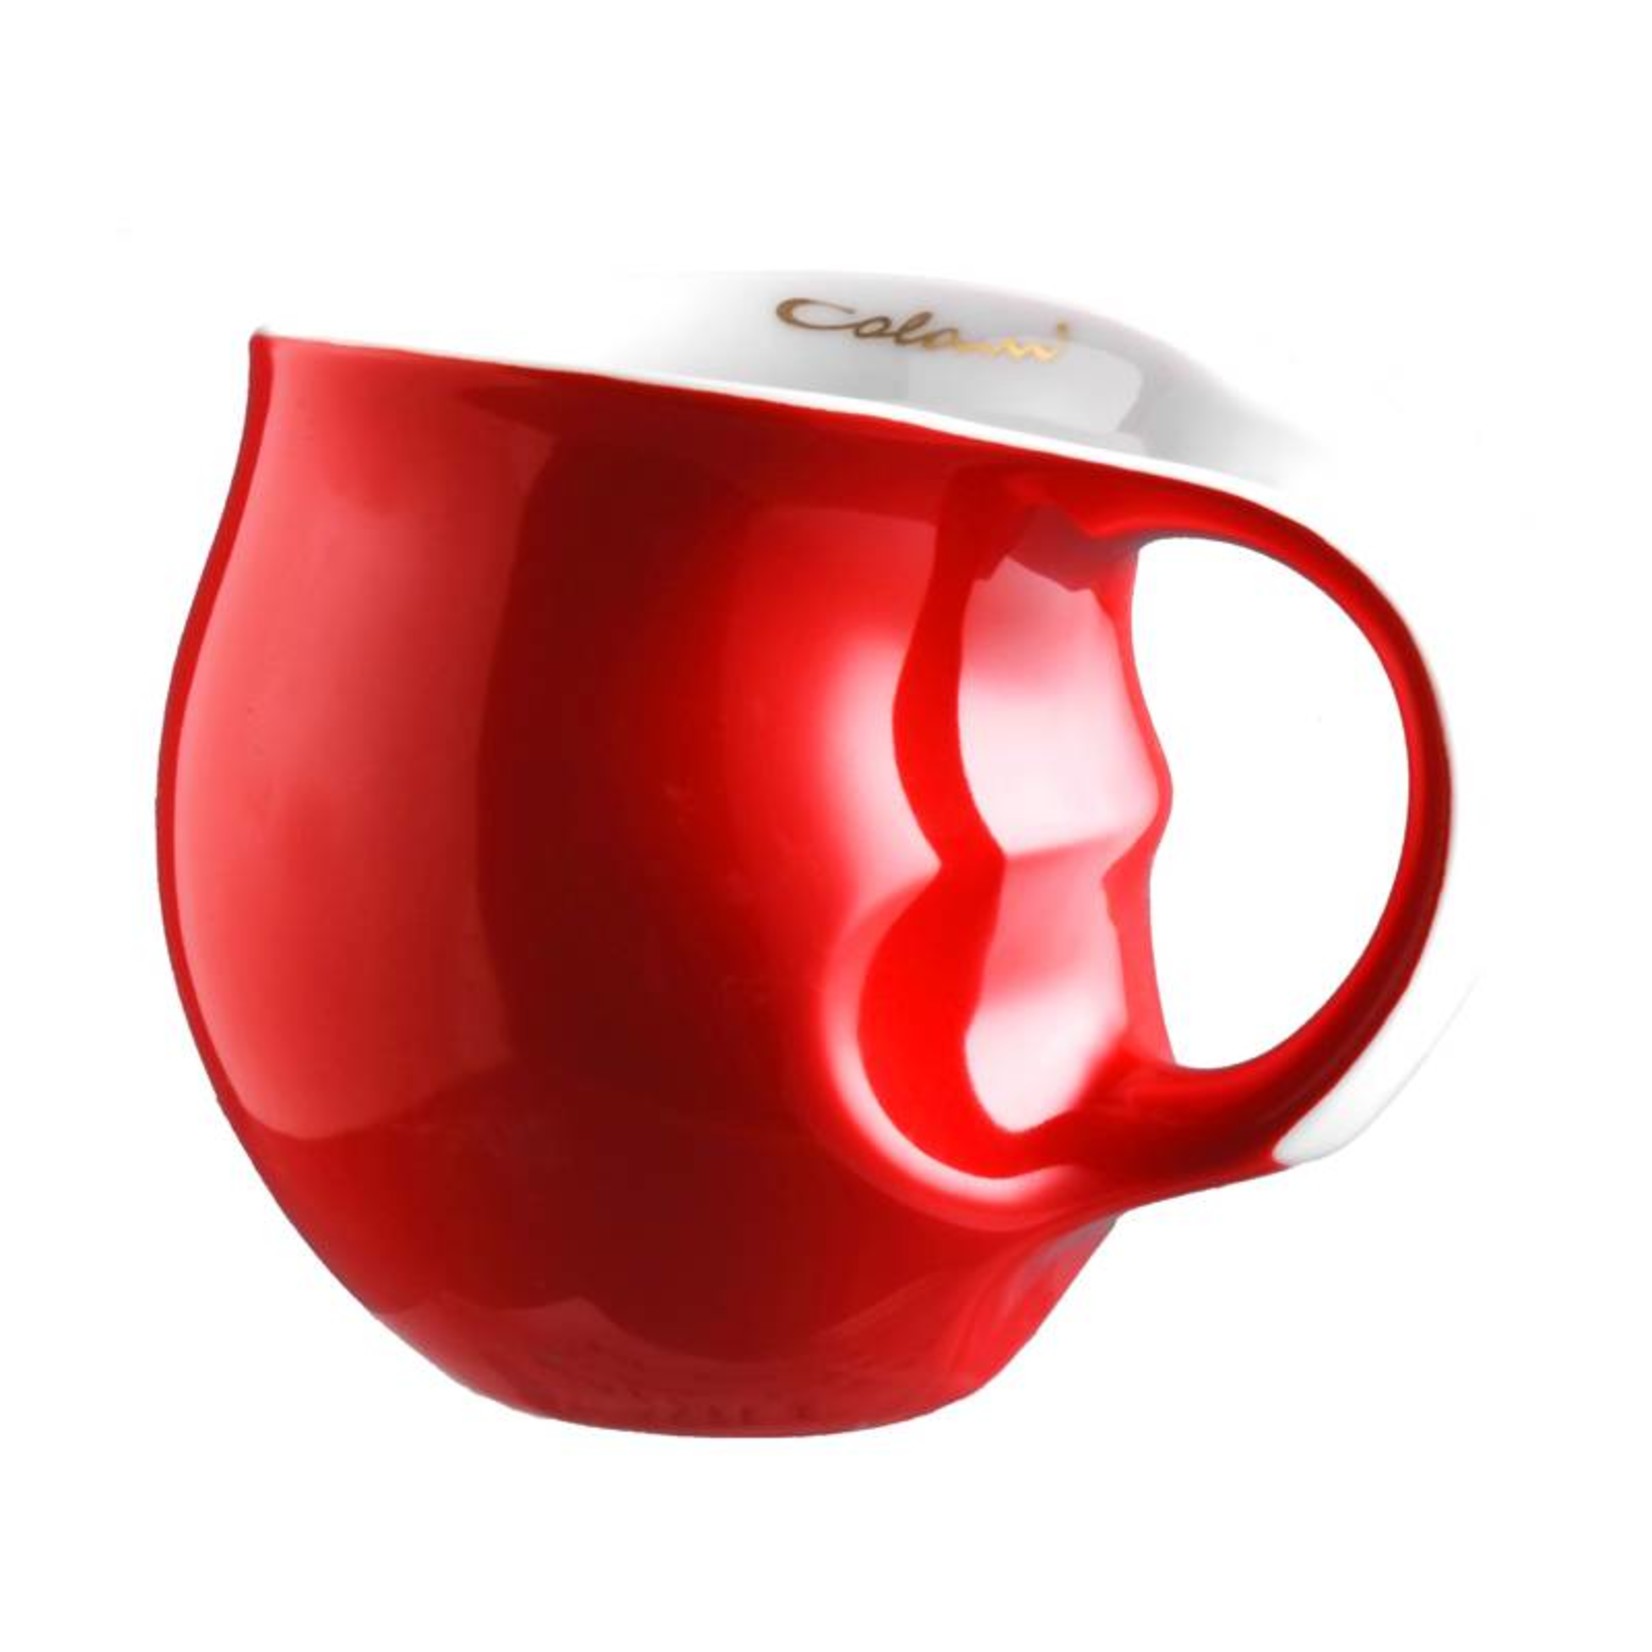 Colani Porzellanserie Luigi Colani Kaffeebecher aus Porzellan in Rot